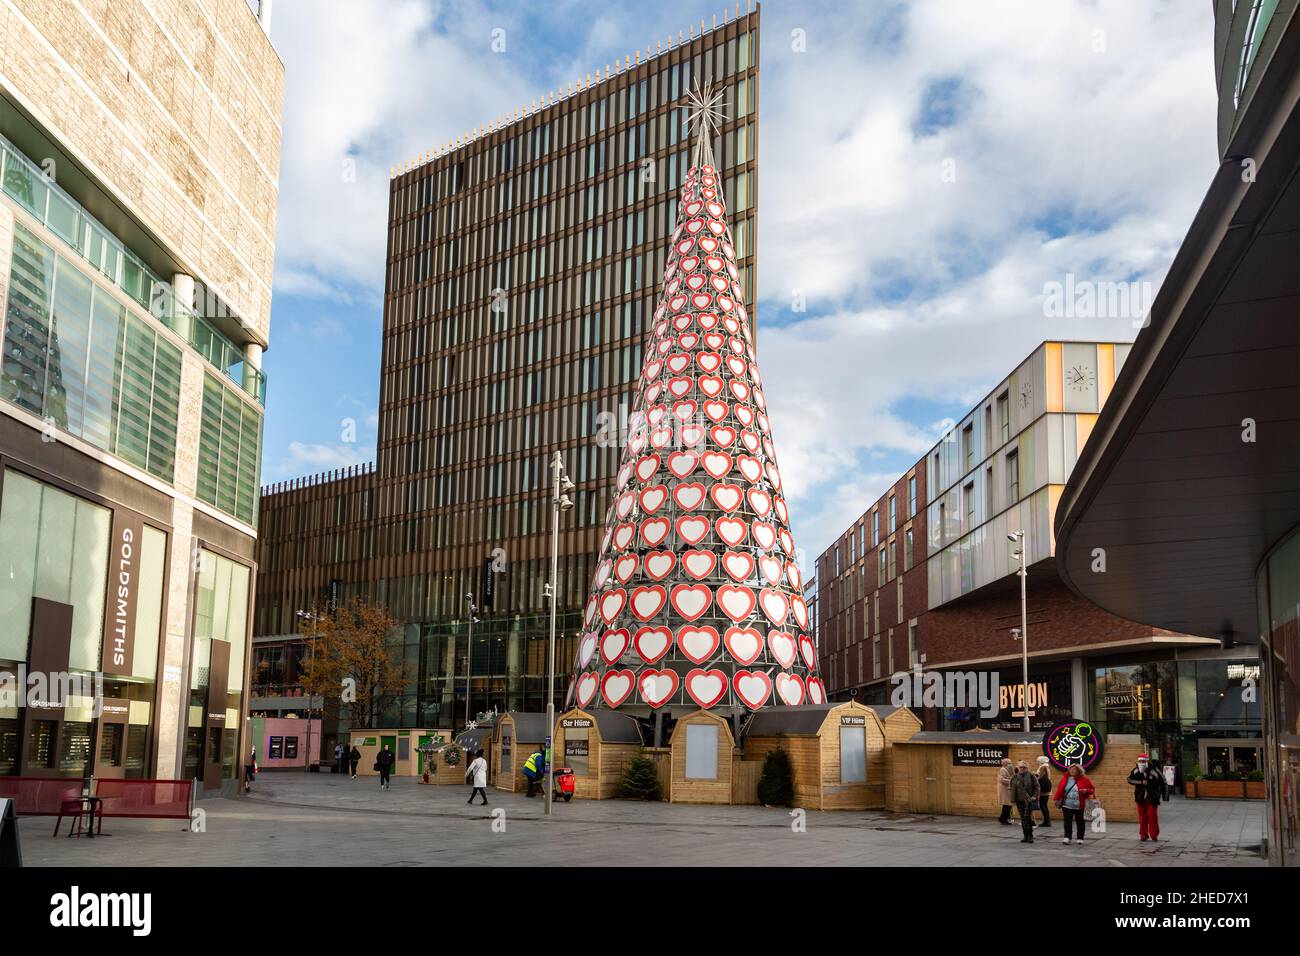 Liverpool, UK: Giant Christmas tree and Bar Hutte apres ski bar, city centre. Stock Photo